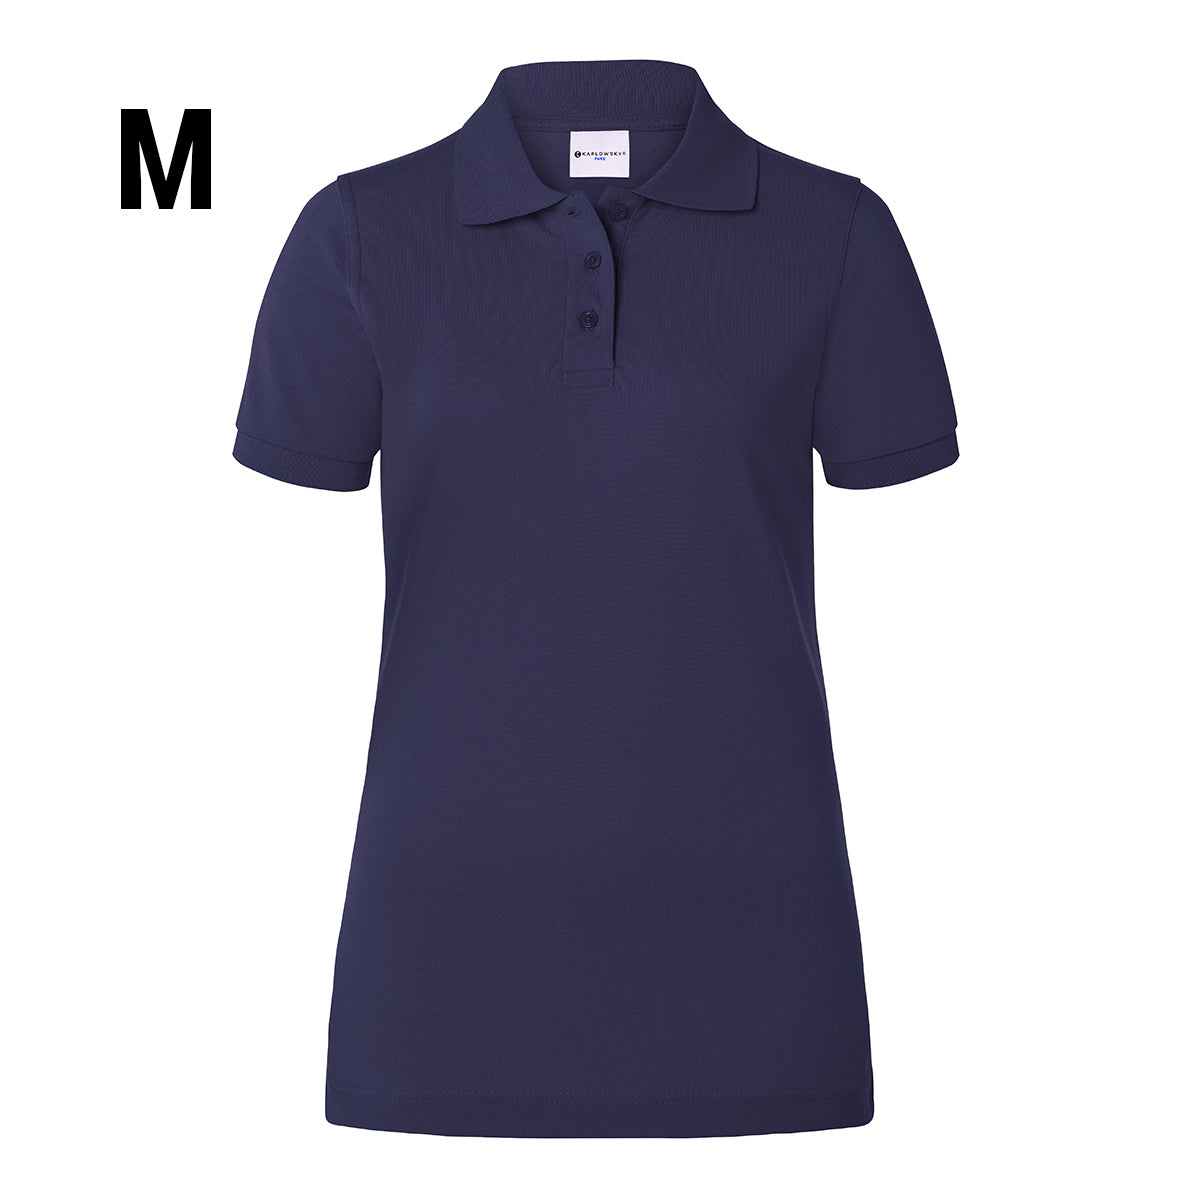 Karlowsky - Arbejdsbeklædning Basic Poloshirt til damer - Navy - Størrelse: M